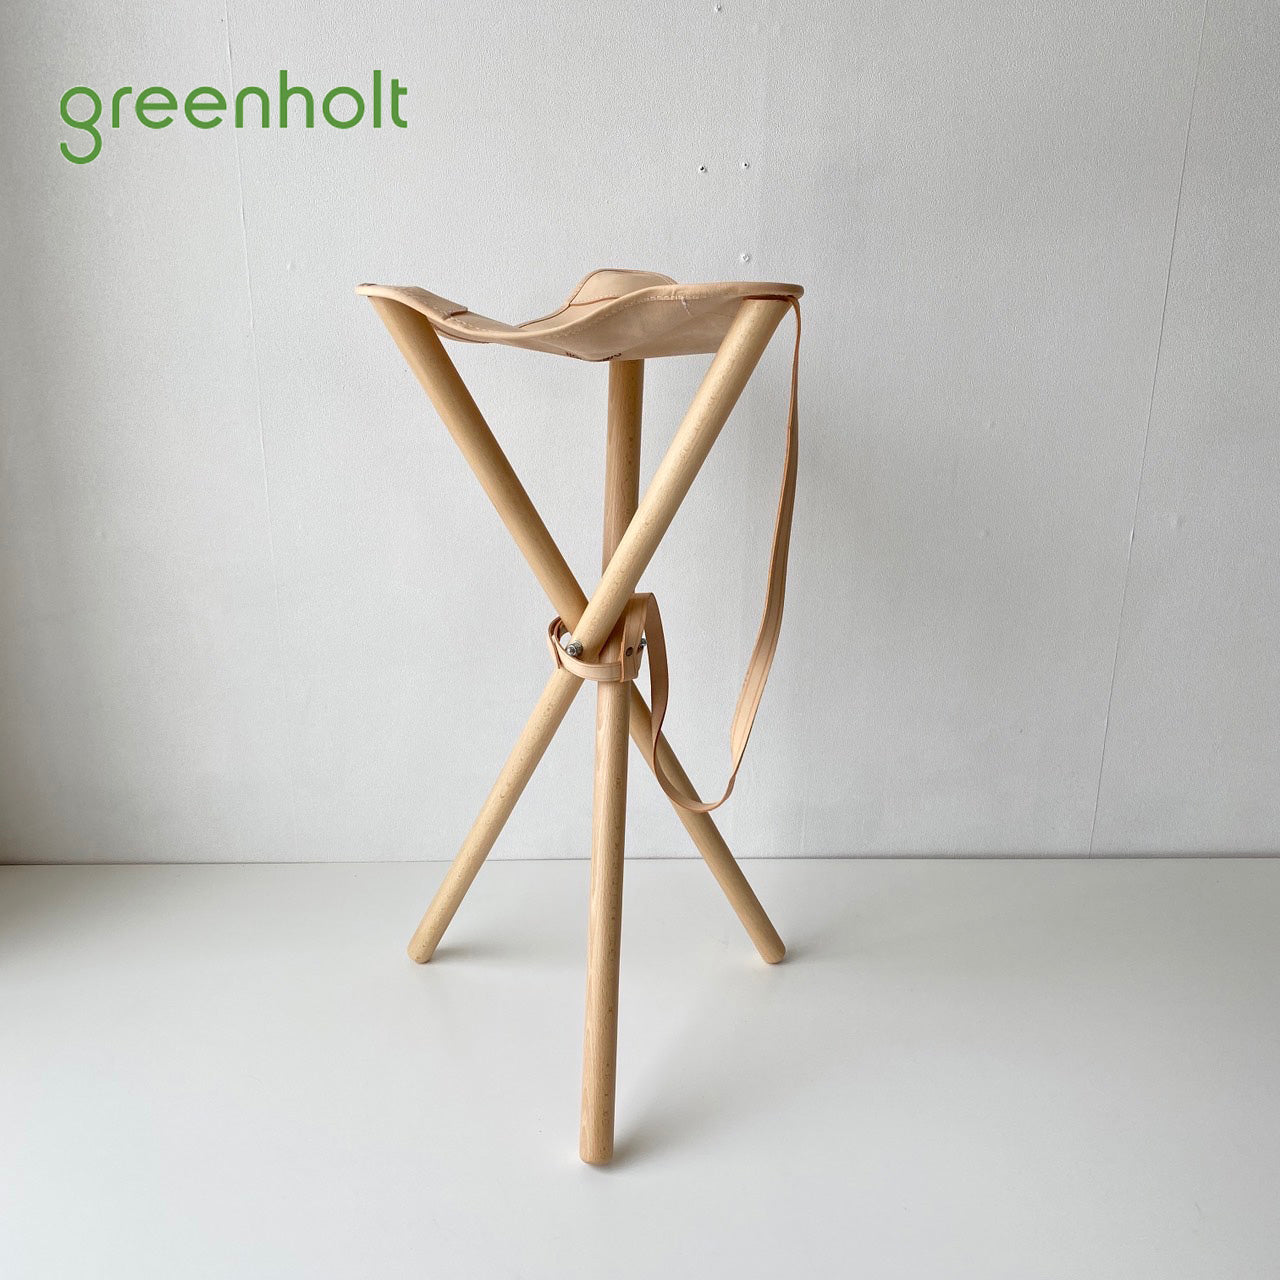 greenholt グリーンホルト HUNTING CHAIR SMALL ハンティングチェア スモール 北欧デンマーク 折りたたみ椅子 アウトドア